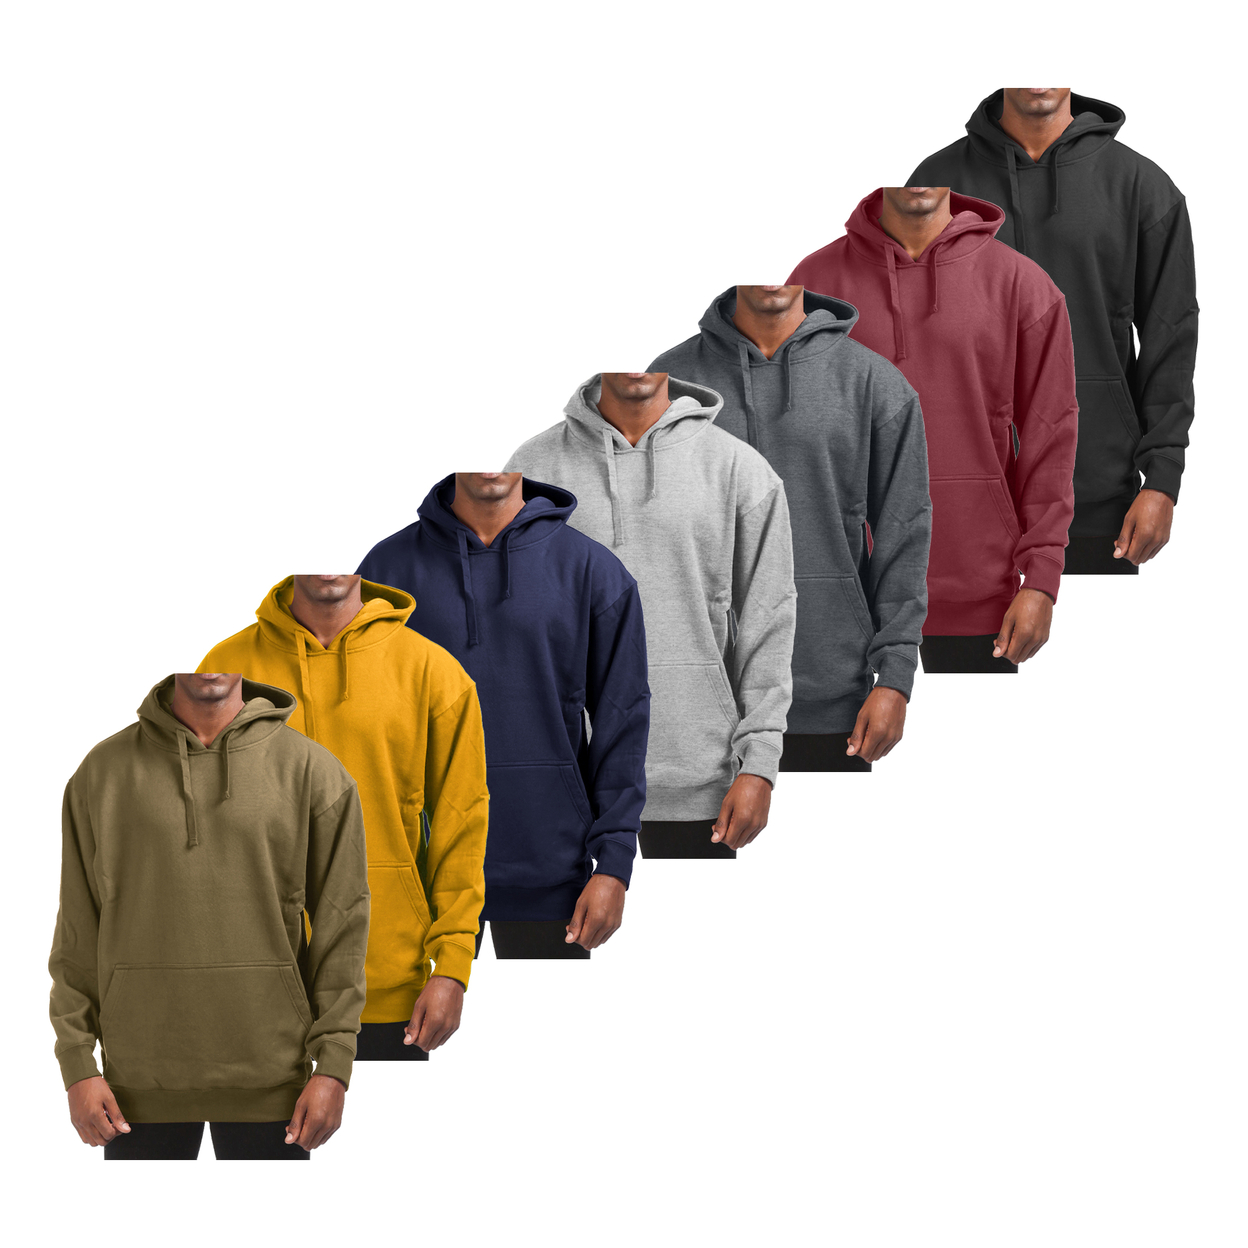 2-Pack: Men's Super-Soft Winter Warm Cotton-Blend Fleece Pullover Hoodie With Kangaroo Pocket - Black & Charcoal, Medium